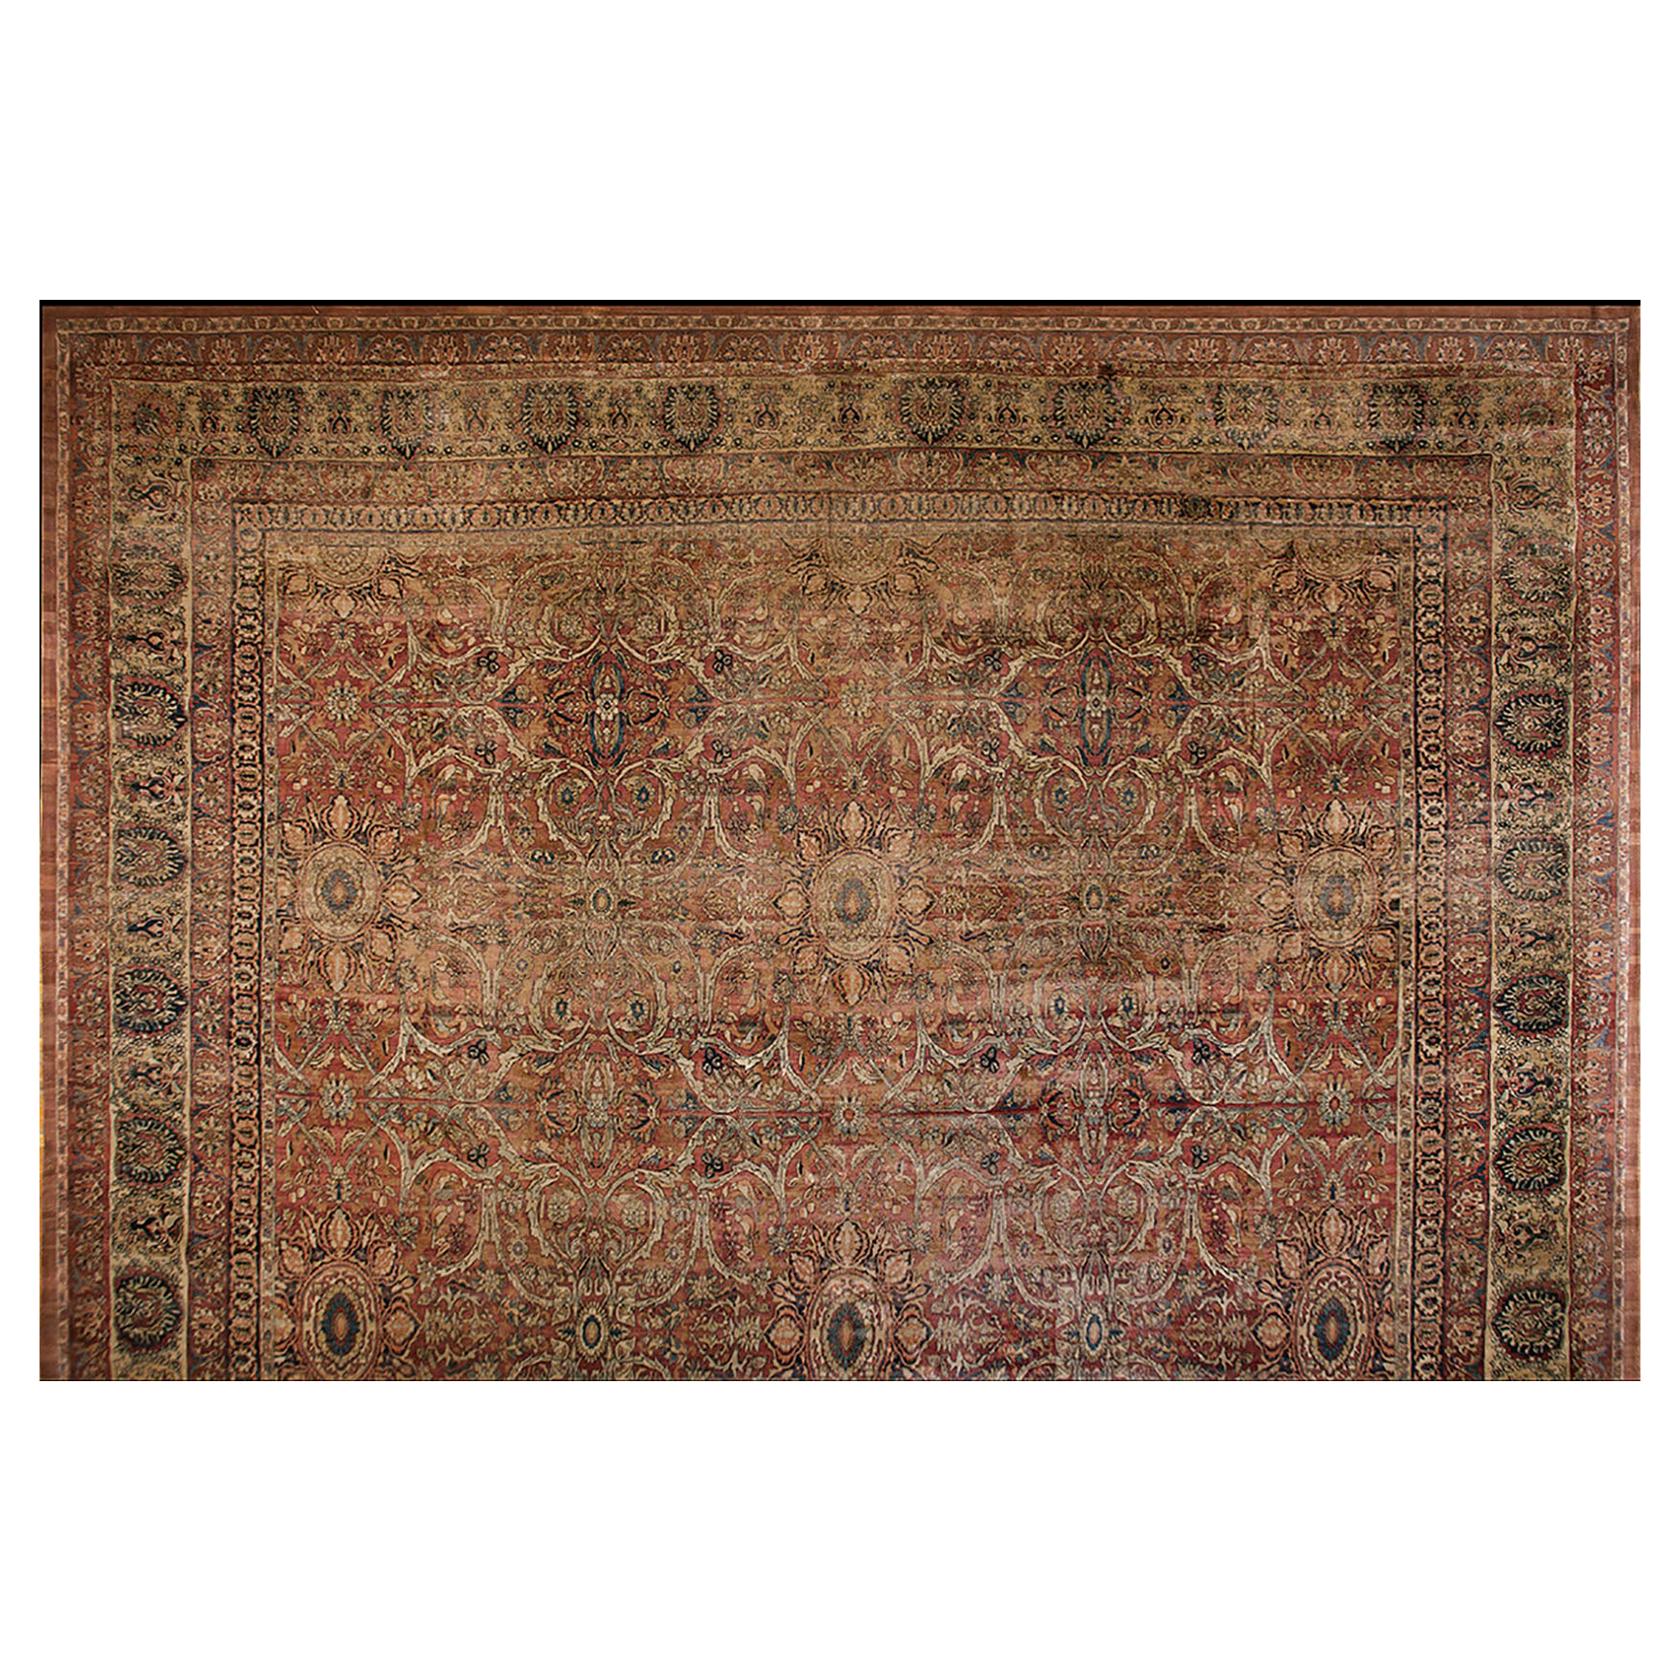 19th Century Persian Kerman Laver Carpet ( 21' x 28' - 640 x 853 ) For Sale